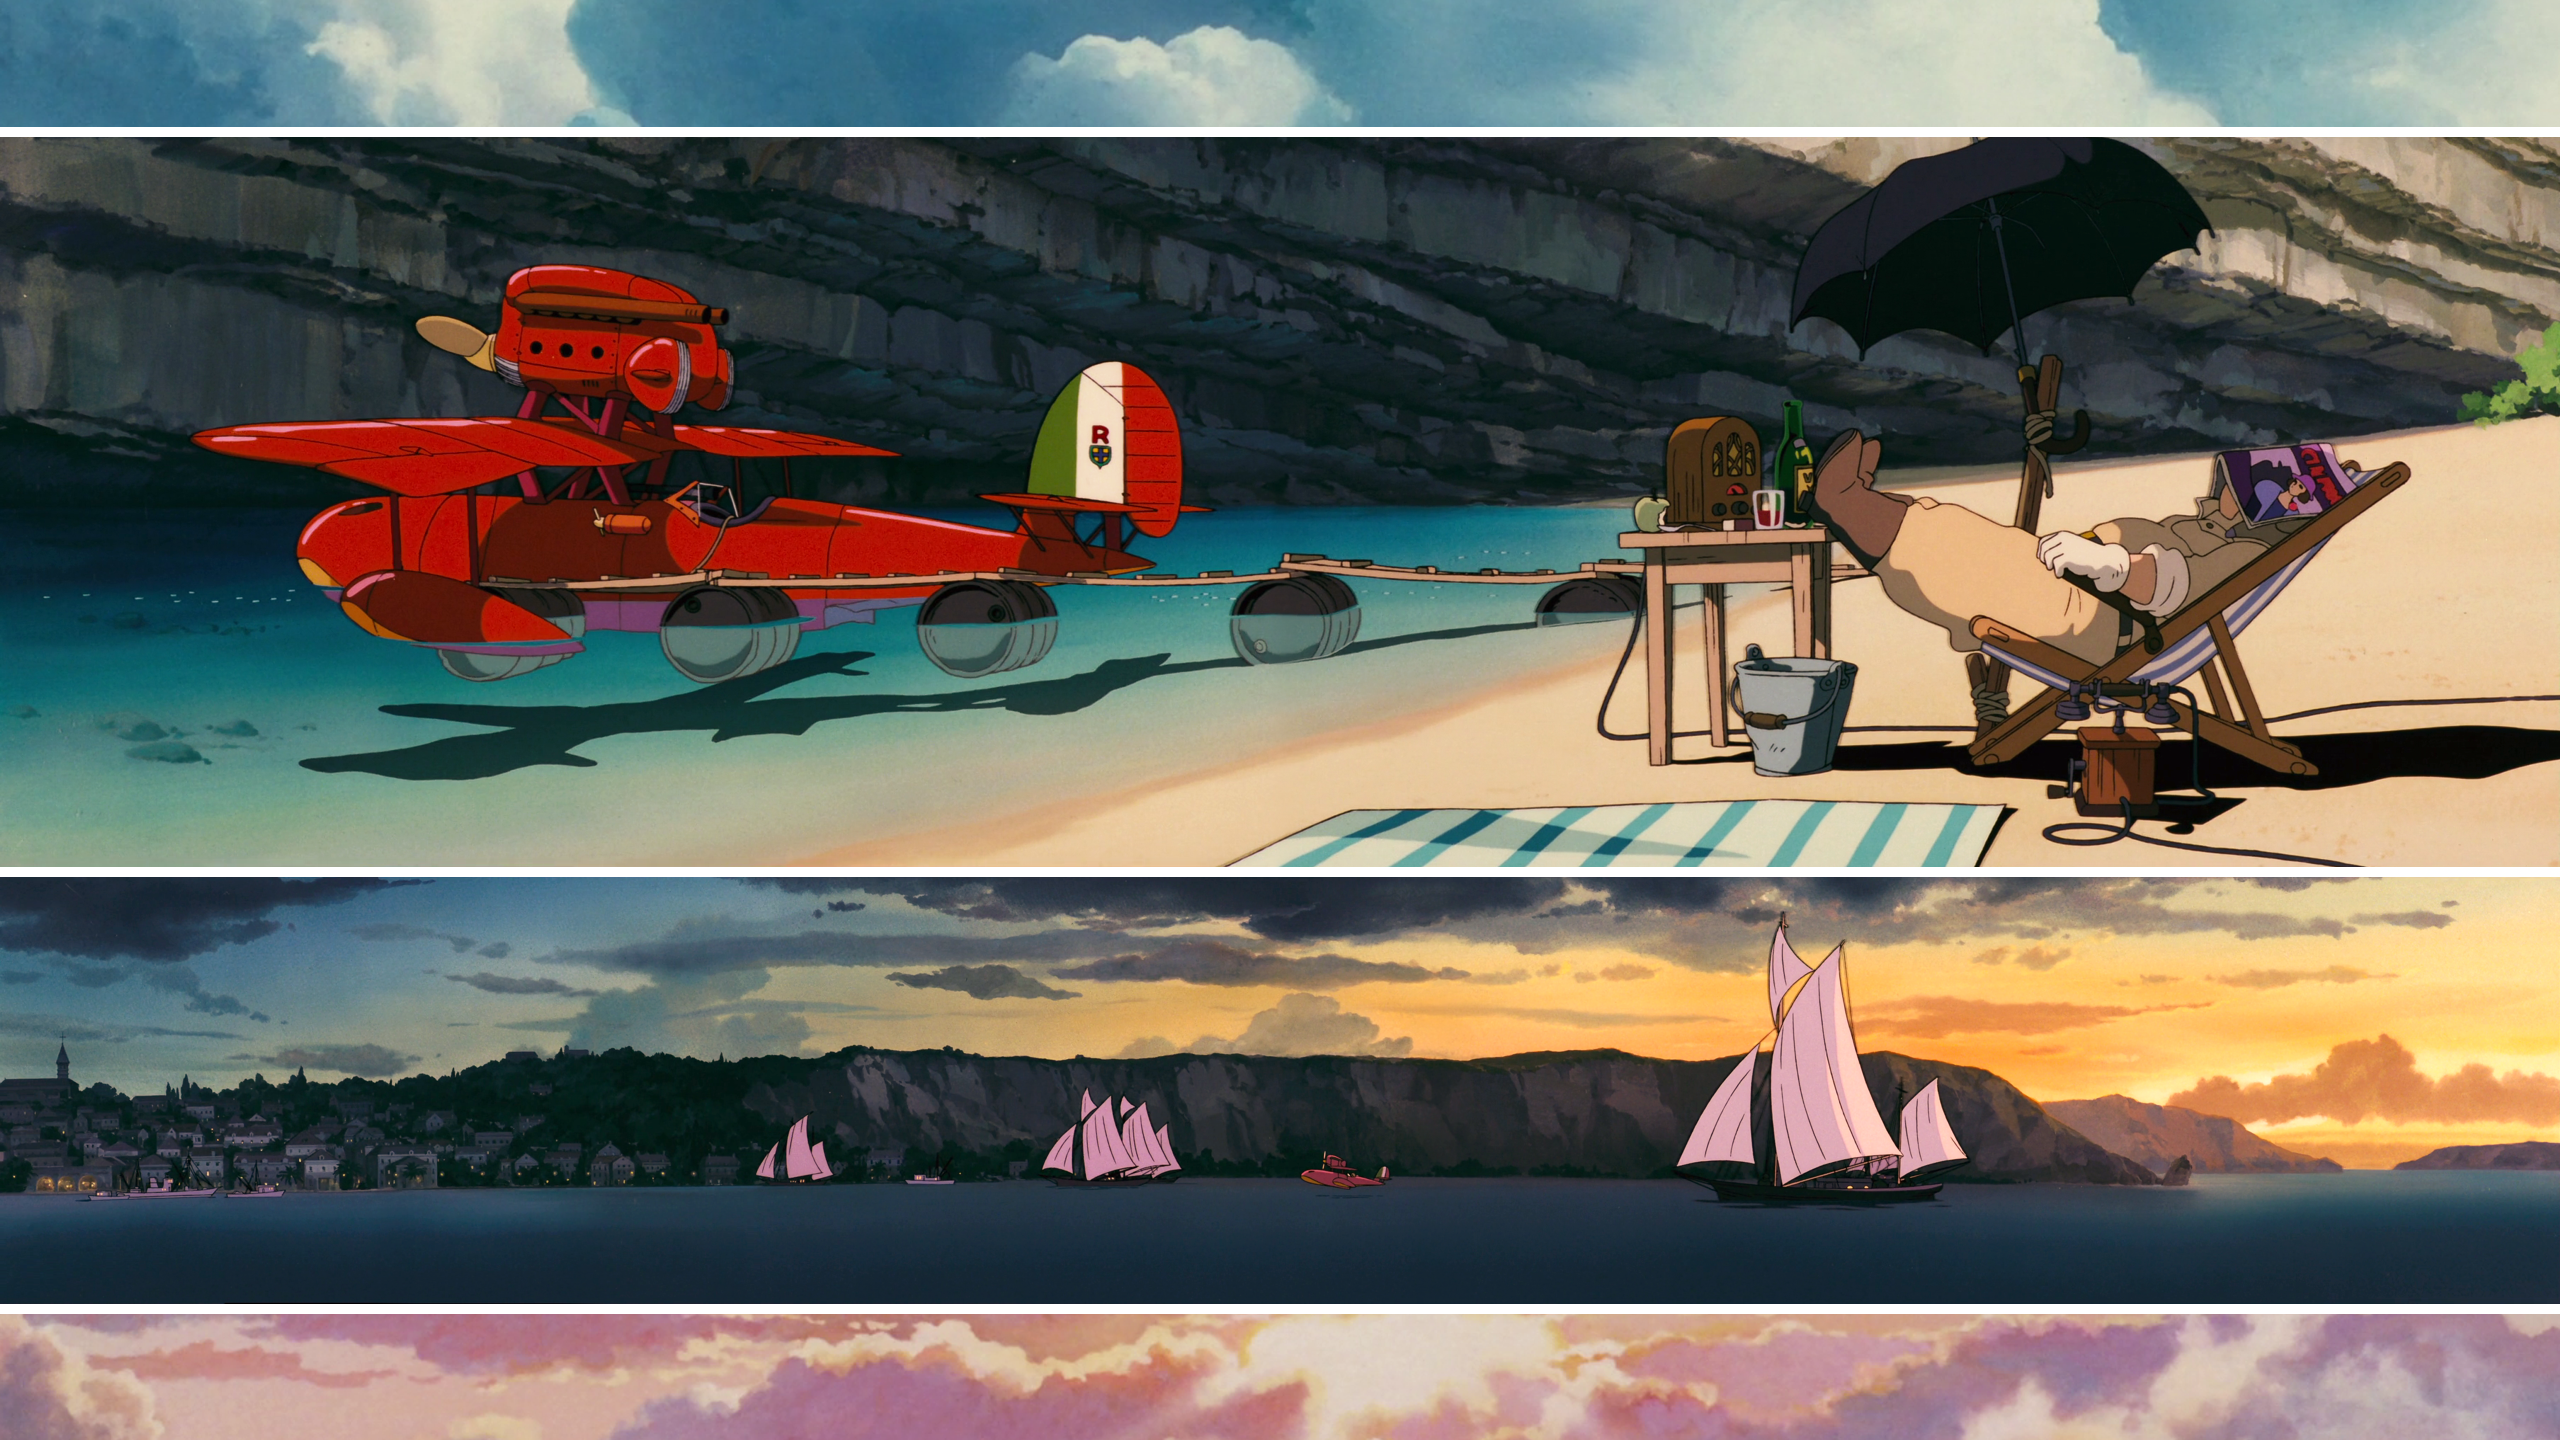 General 2560x1440 anime Porco Rosso digital art collage Studio Ghibli film stills